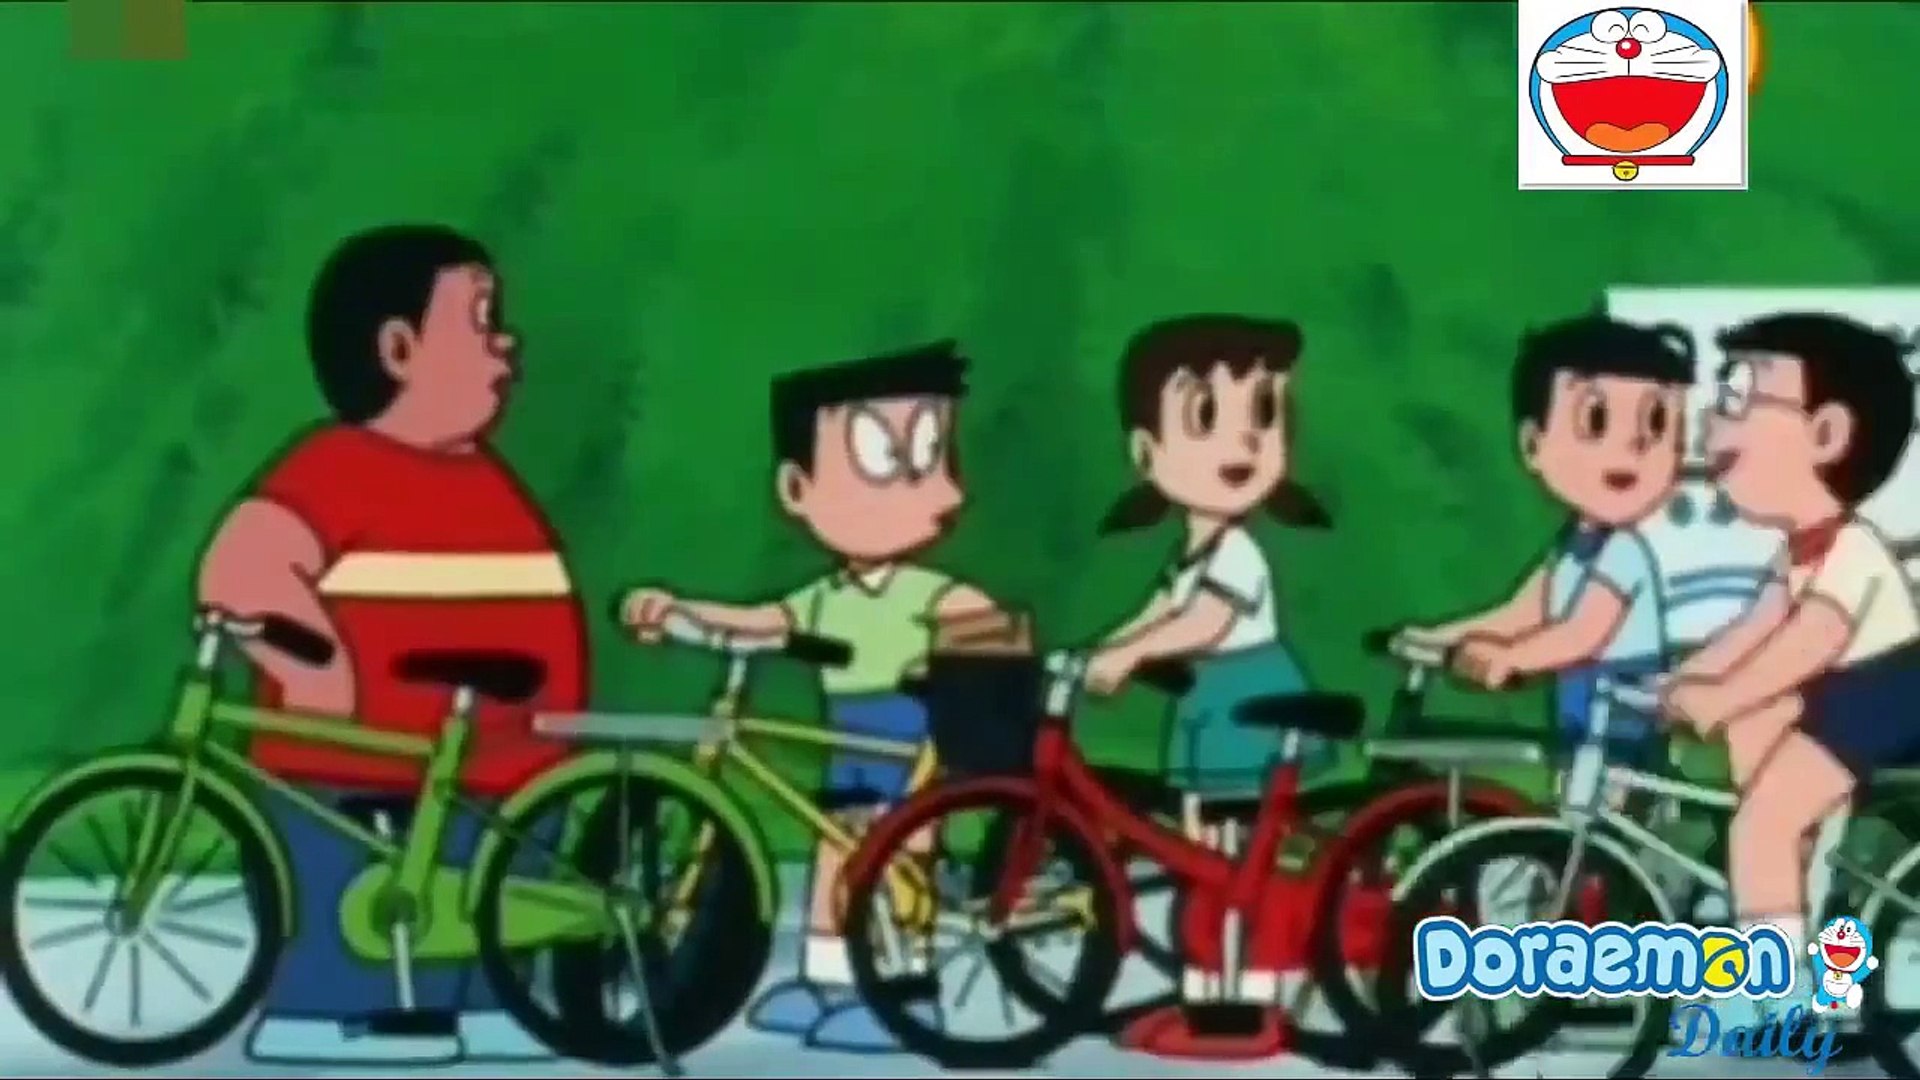 Doraemon In Hindi new episodes full 2015 - Dailymotion Video